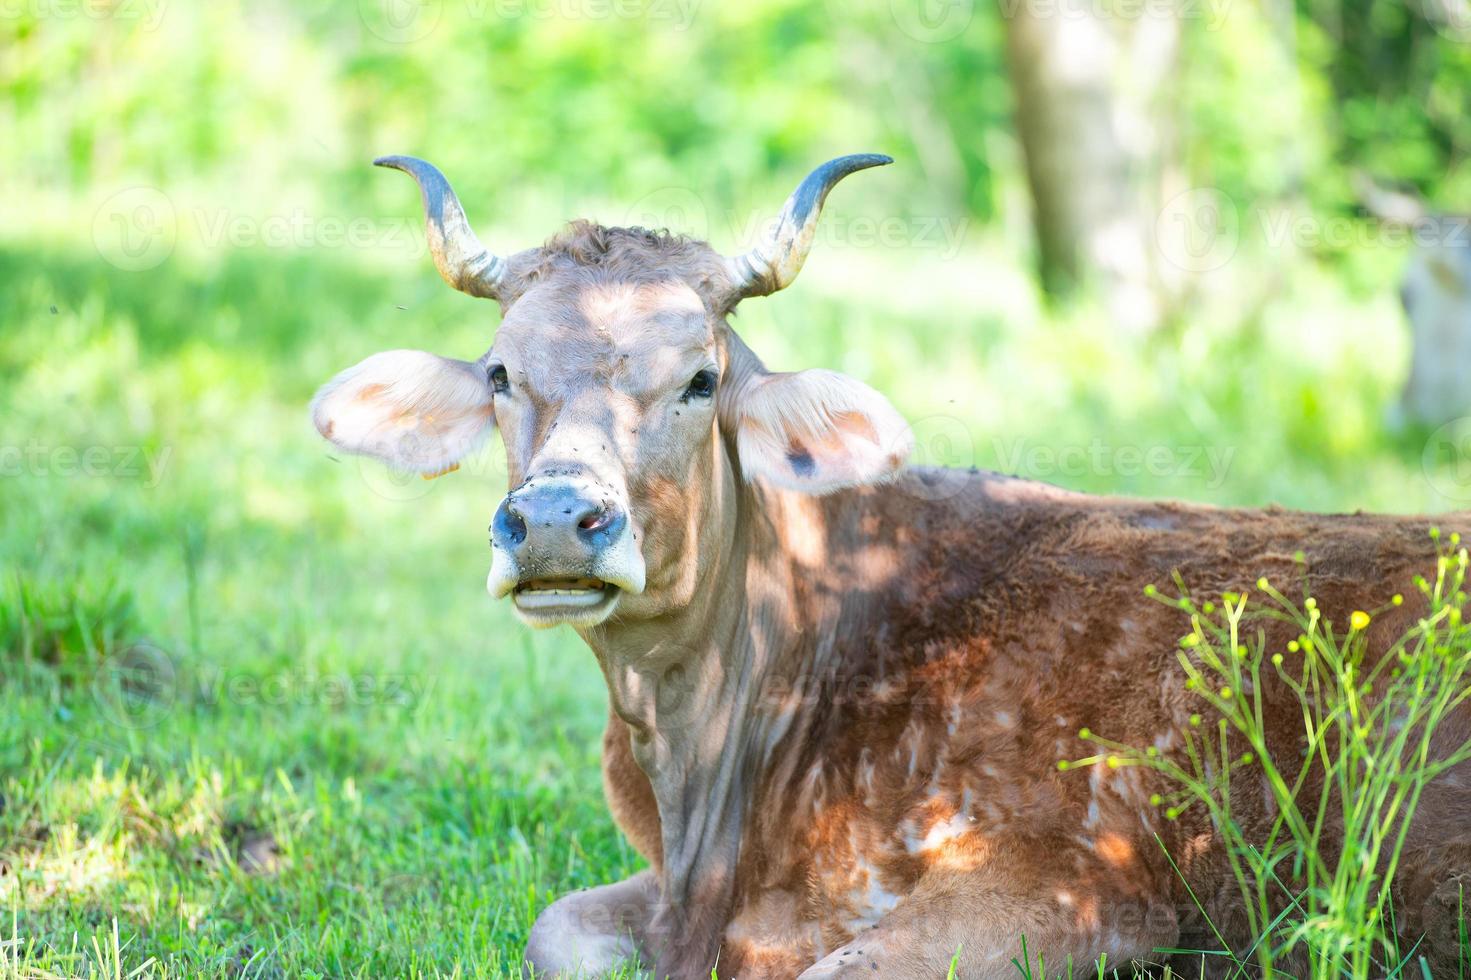 retrato de vaca com chifres grandes na primavera foto